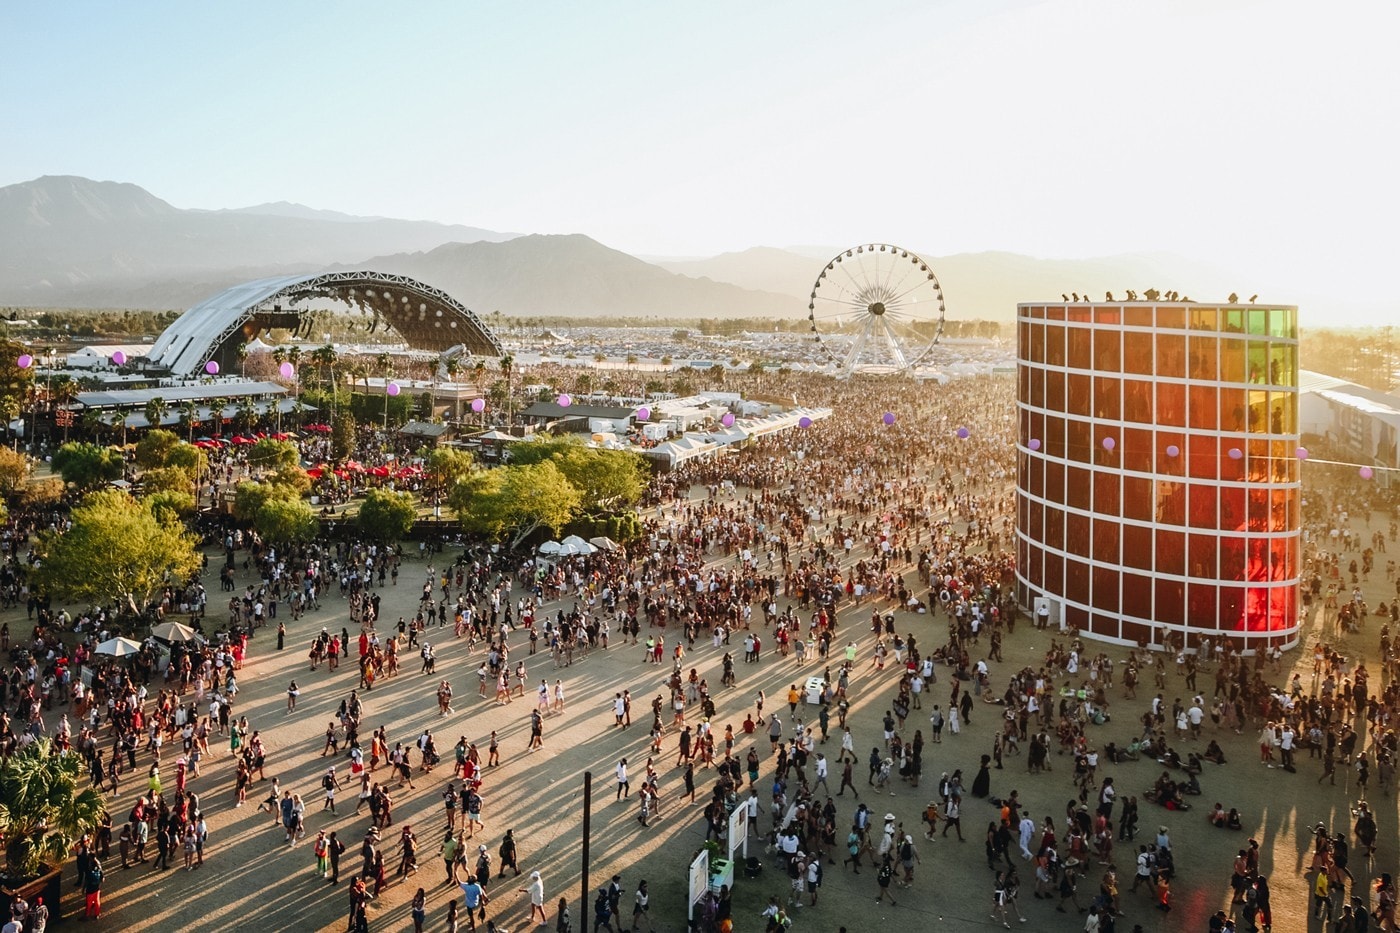 Coachella 2020 宣佈因新型冠狀病毒 COVID-19 關係確定延期至 10 月舉辦 (UPDATE)